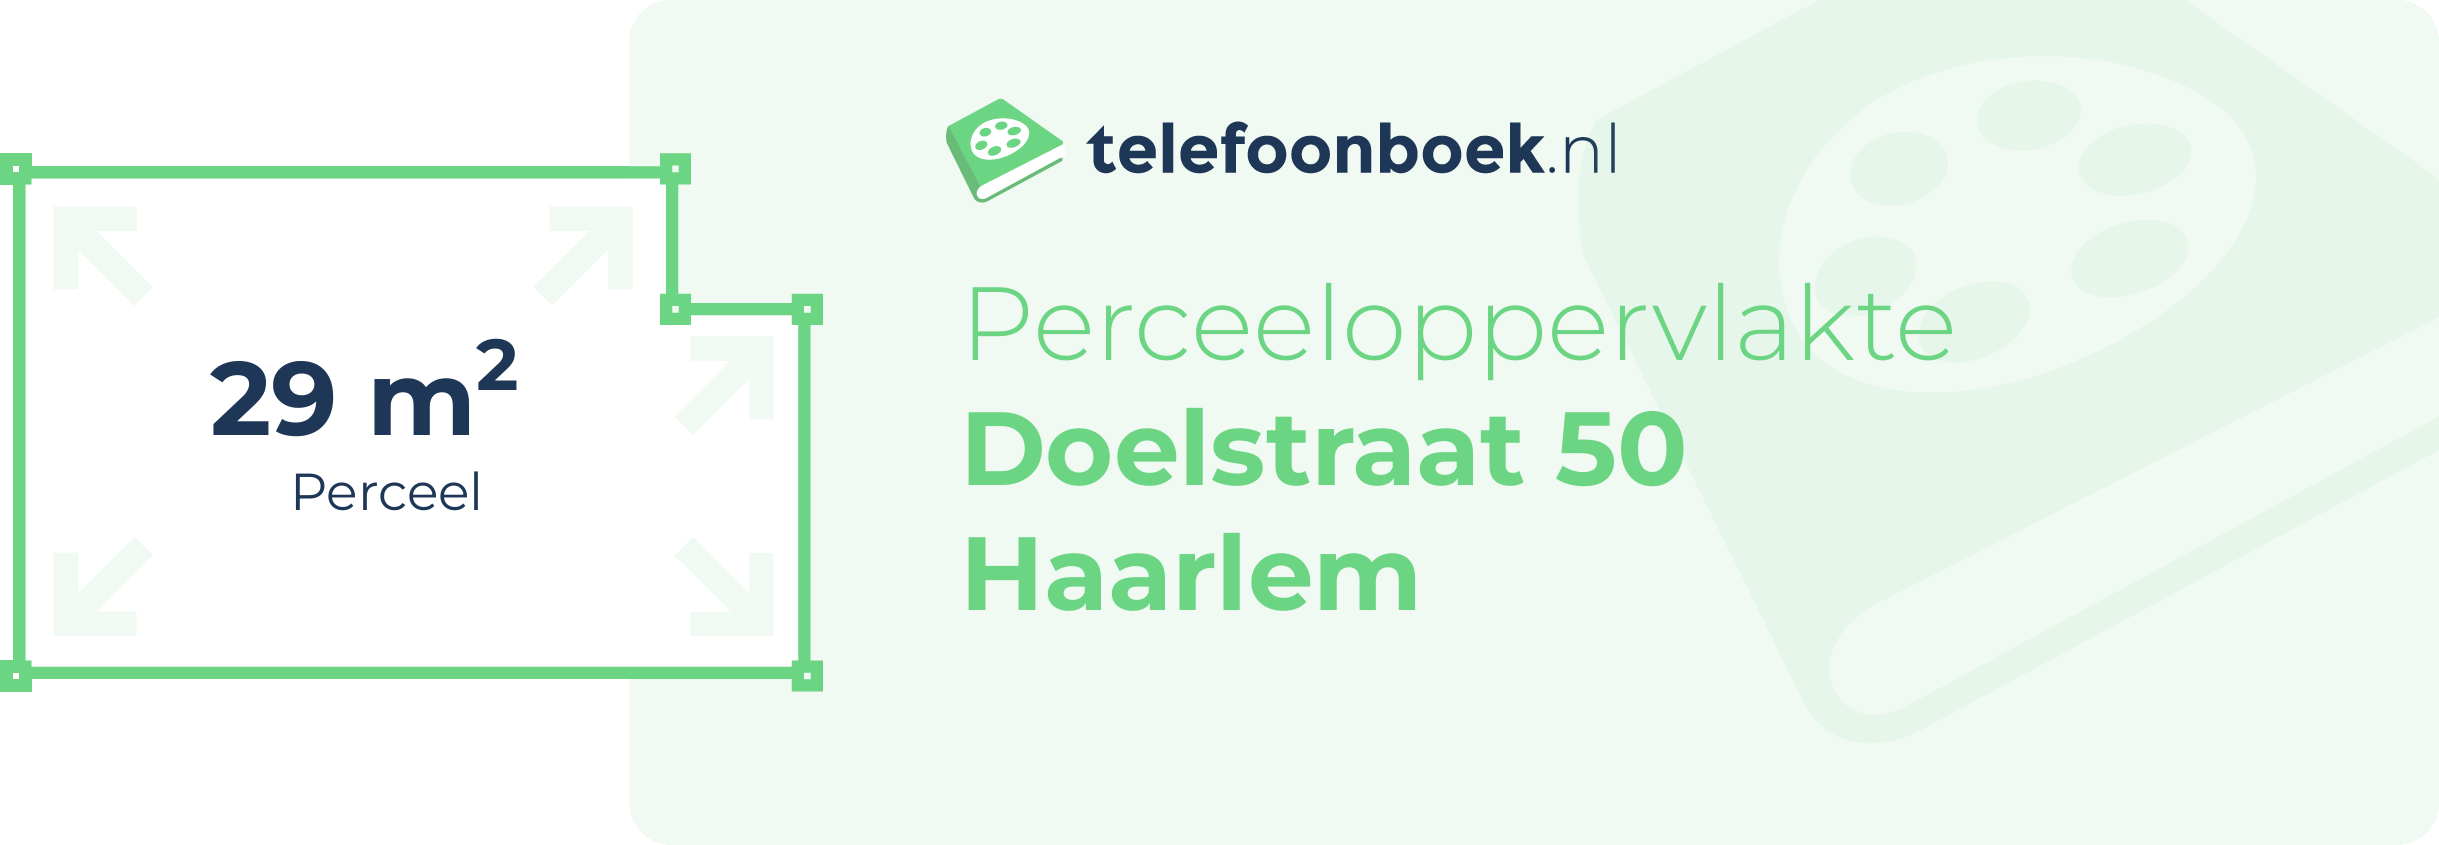 Perceeloppervlakte Doelstraat 50 Haarlem